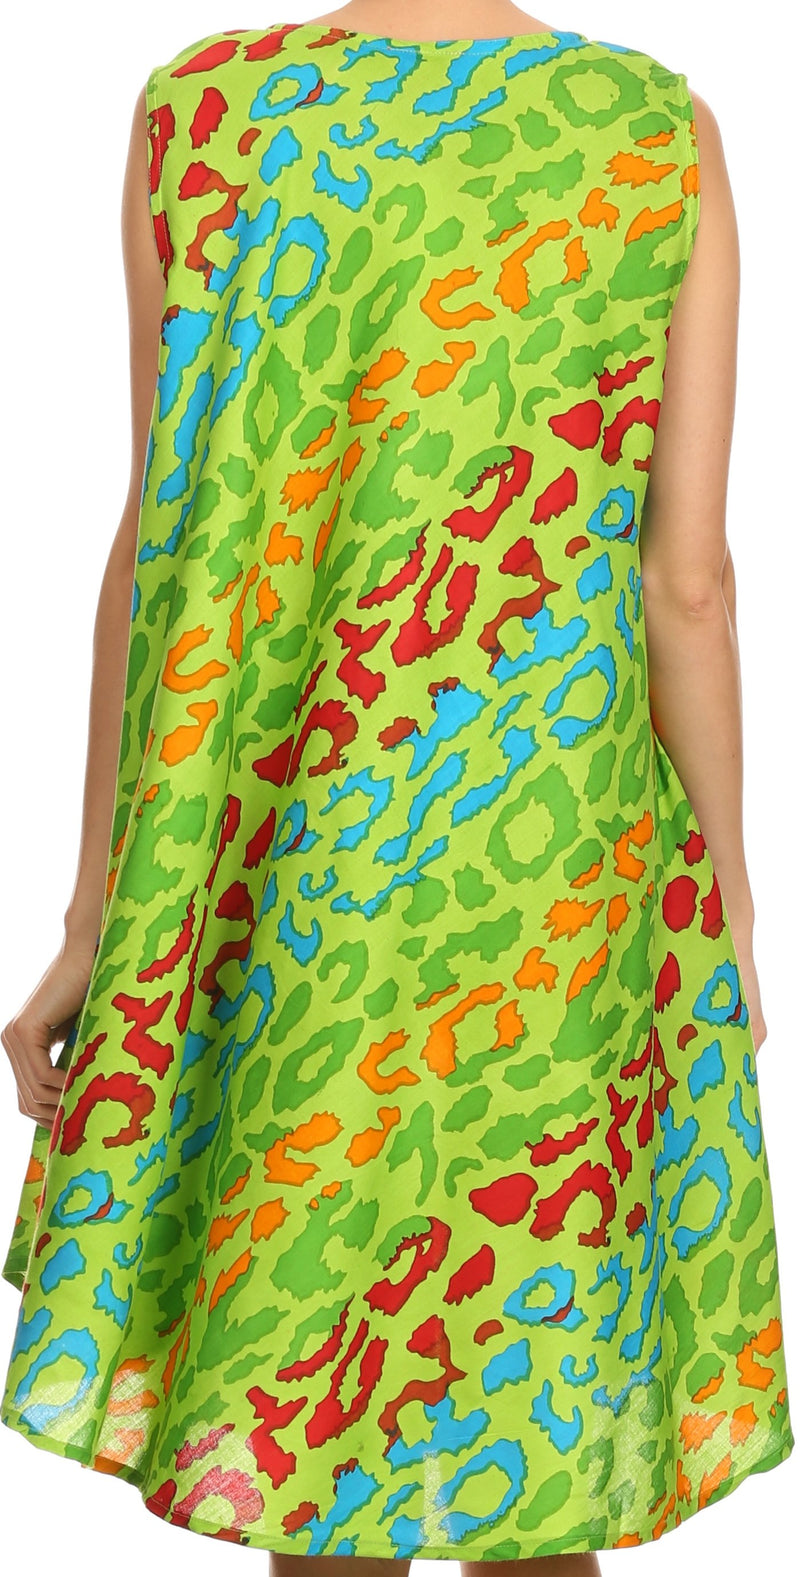 Sakkas Spal Mid Length Scoop Neck Tank Top Printed Batik Caftan Dress / Cover Up